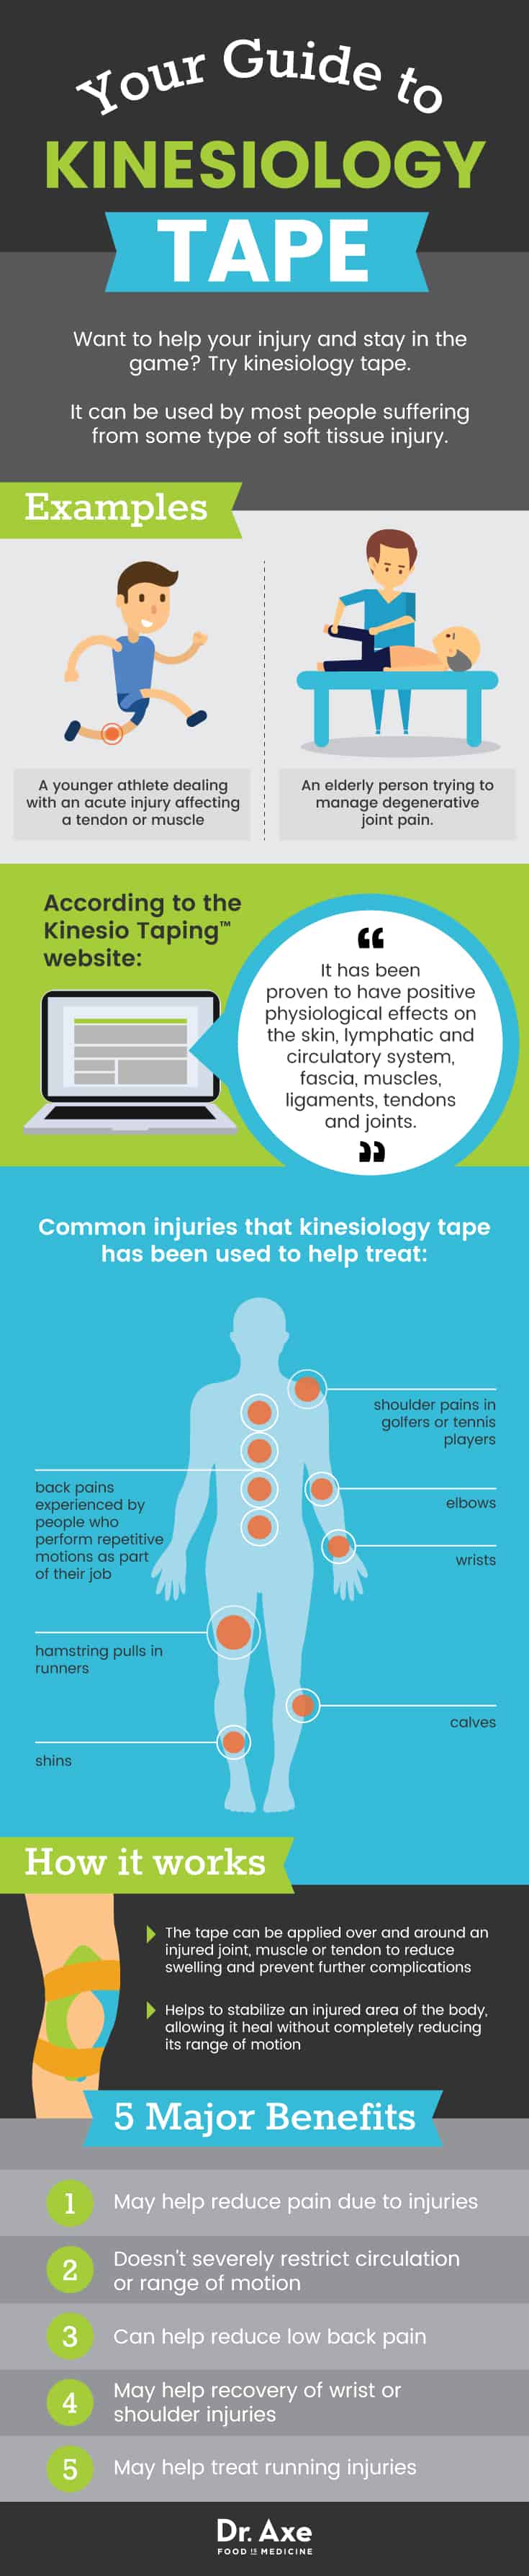 Kinesiology tape - Dr. Axe